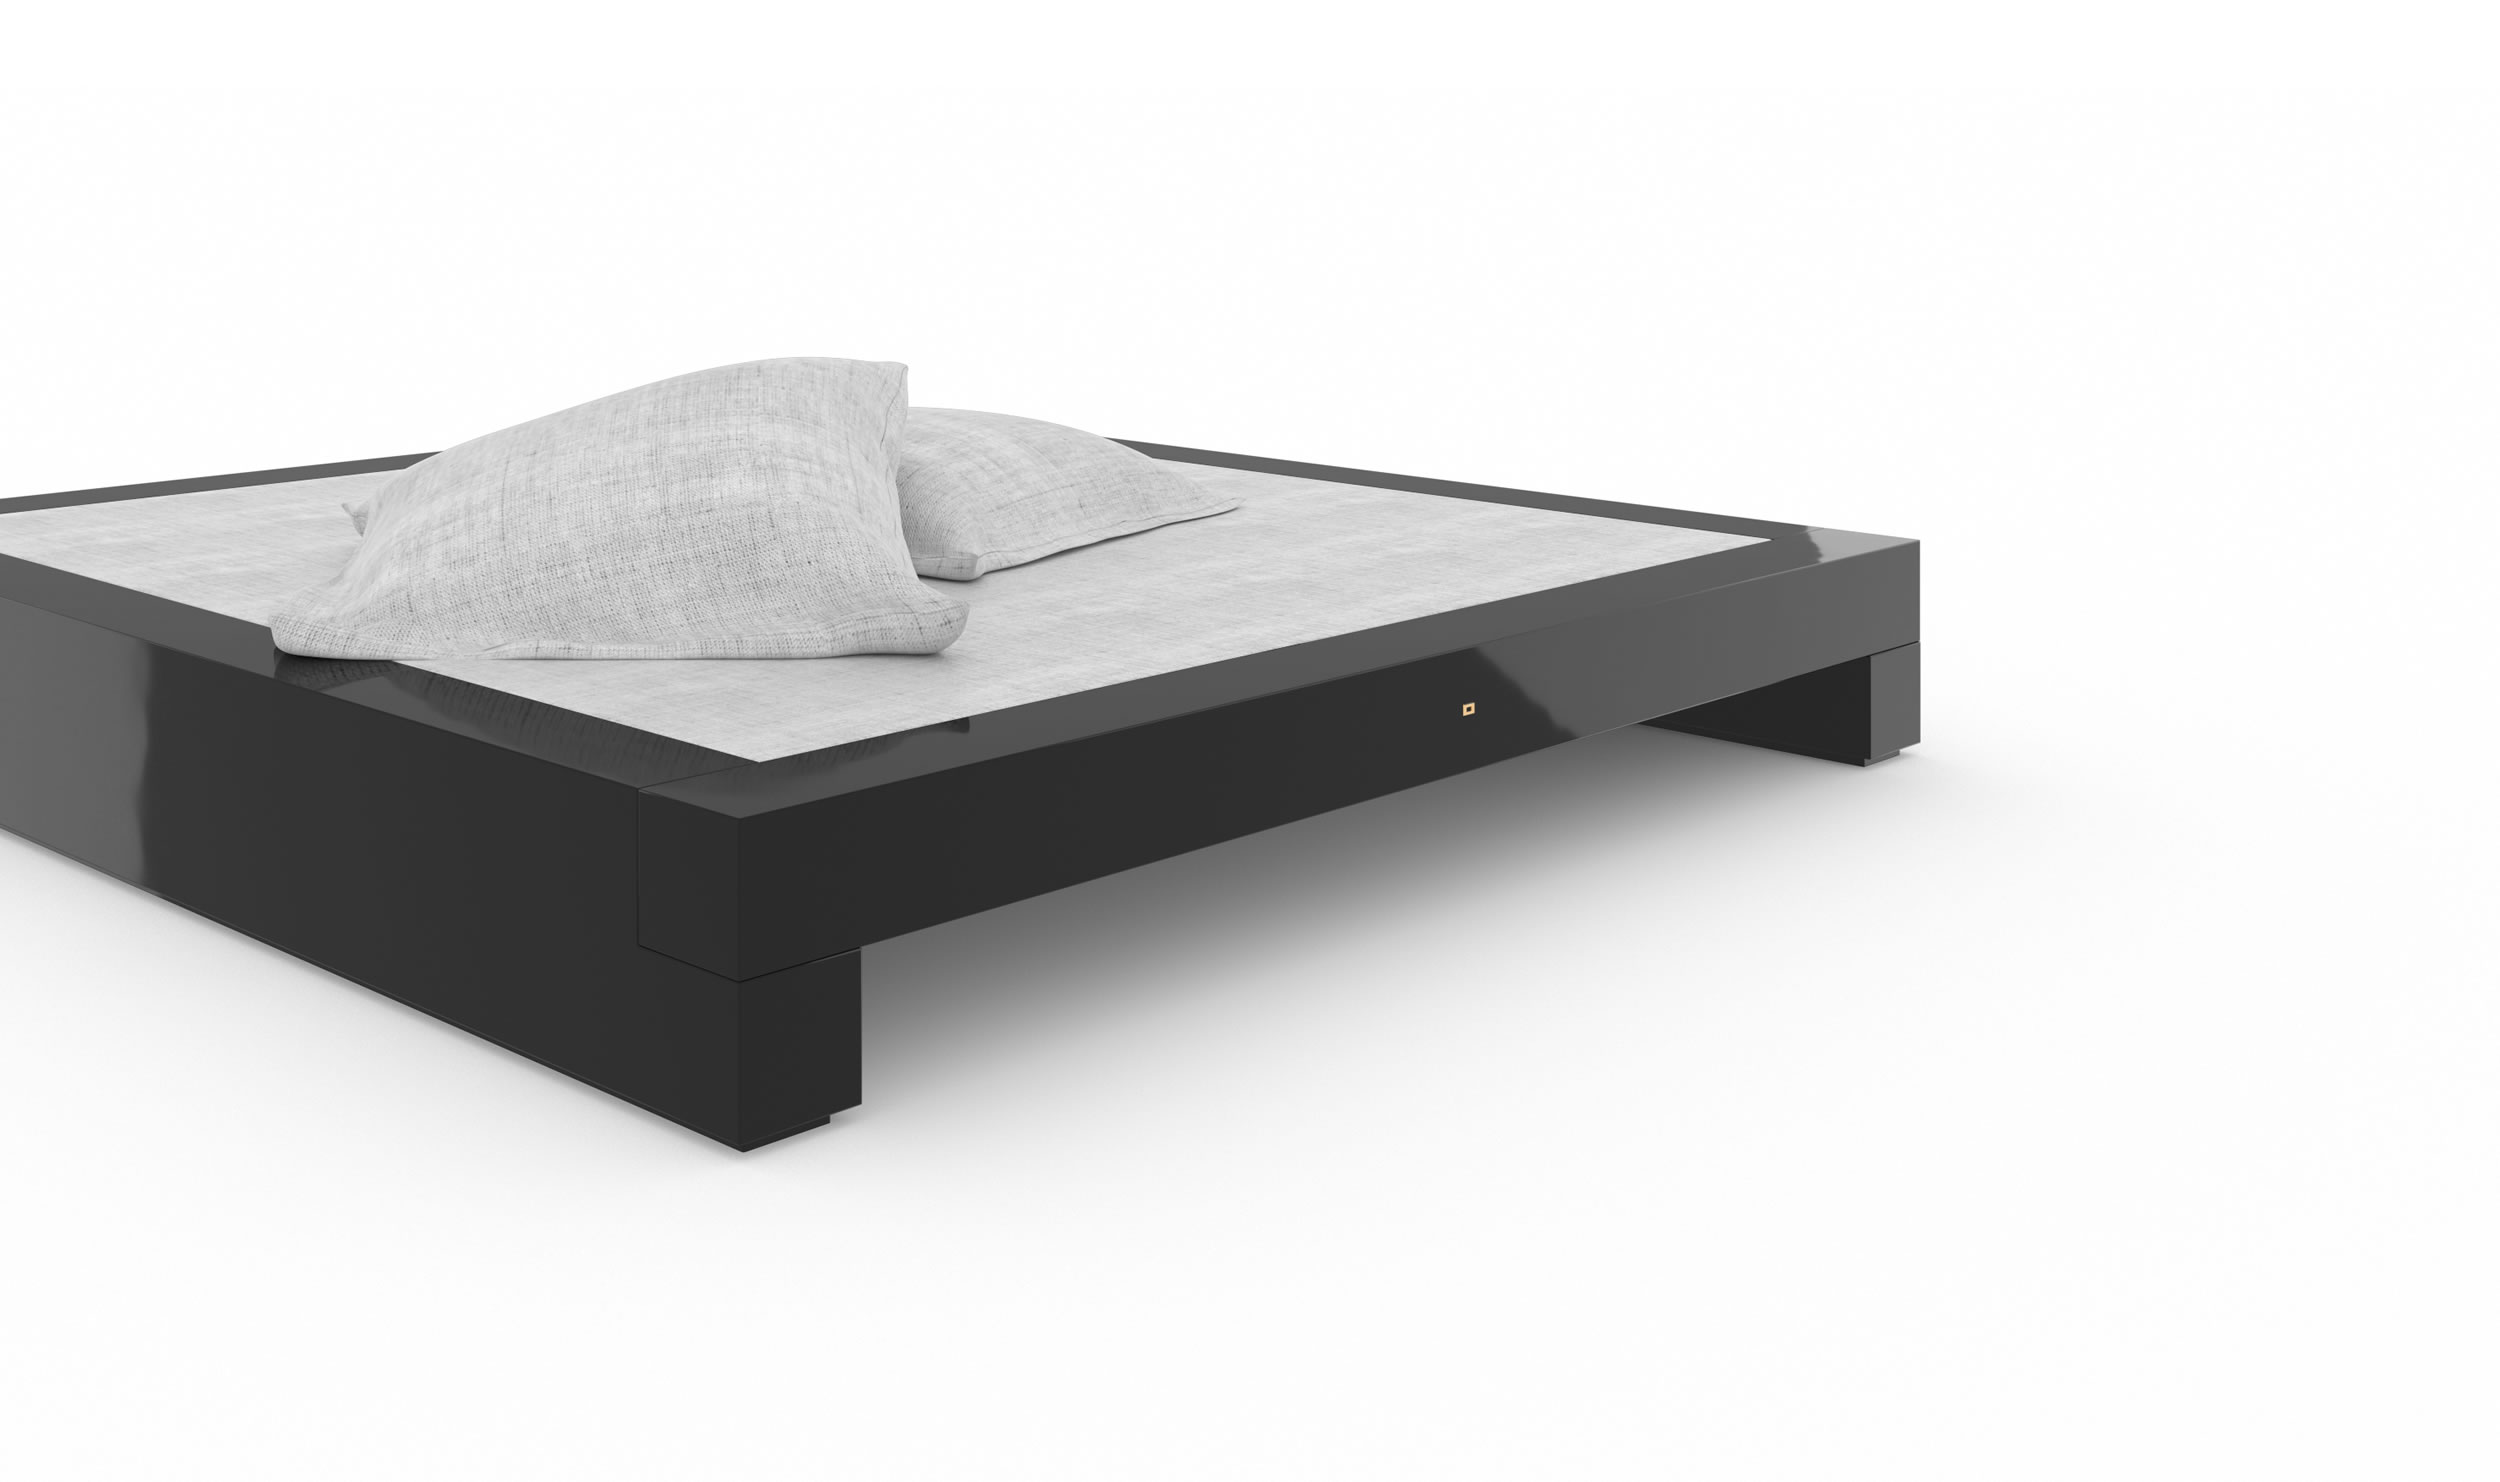 Design Bed Black Glossy Exclusive Custom Made Unique Design Luxury InteriorFELIX SCHWAKE